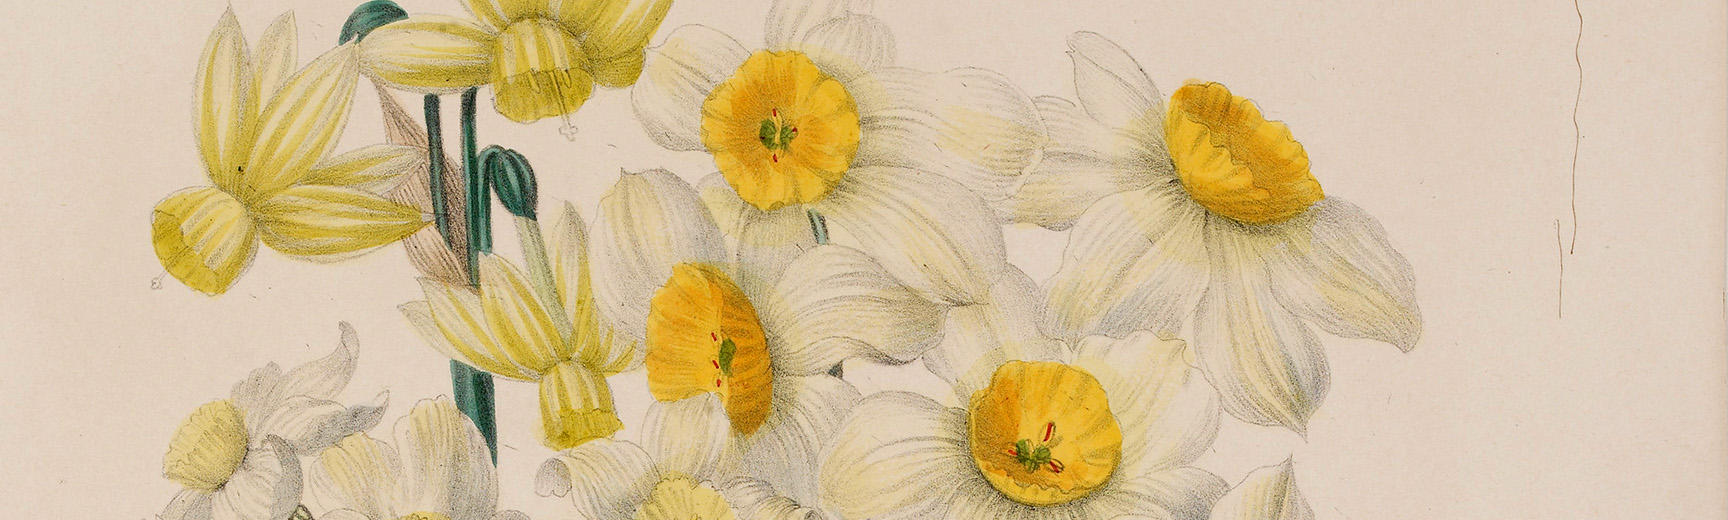 Daffodils by Jane Loudon (detail) 